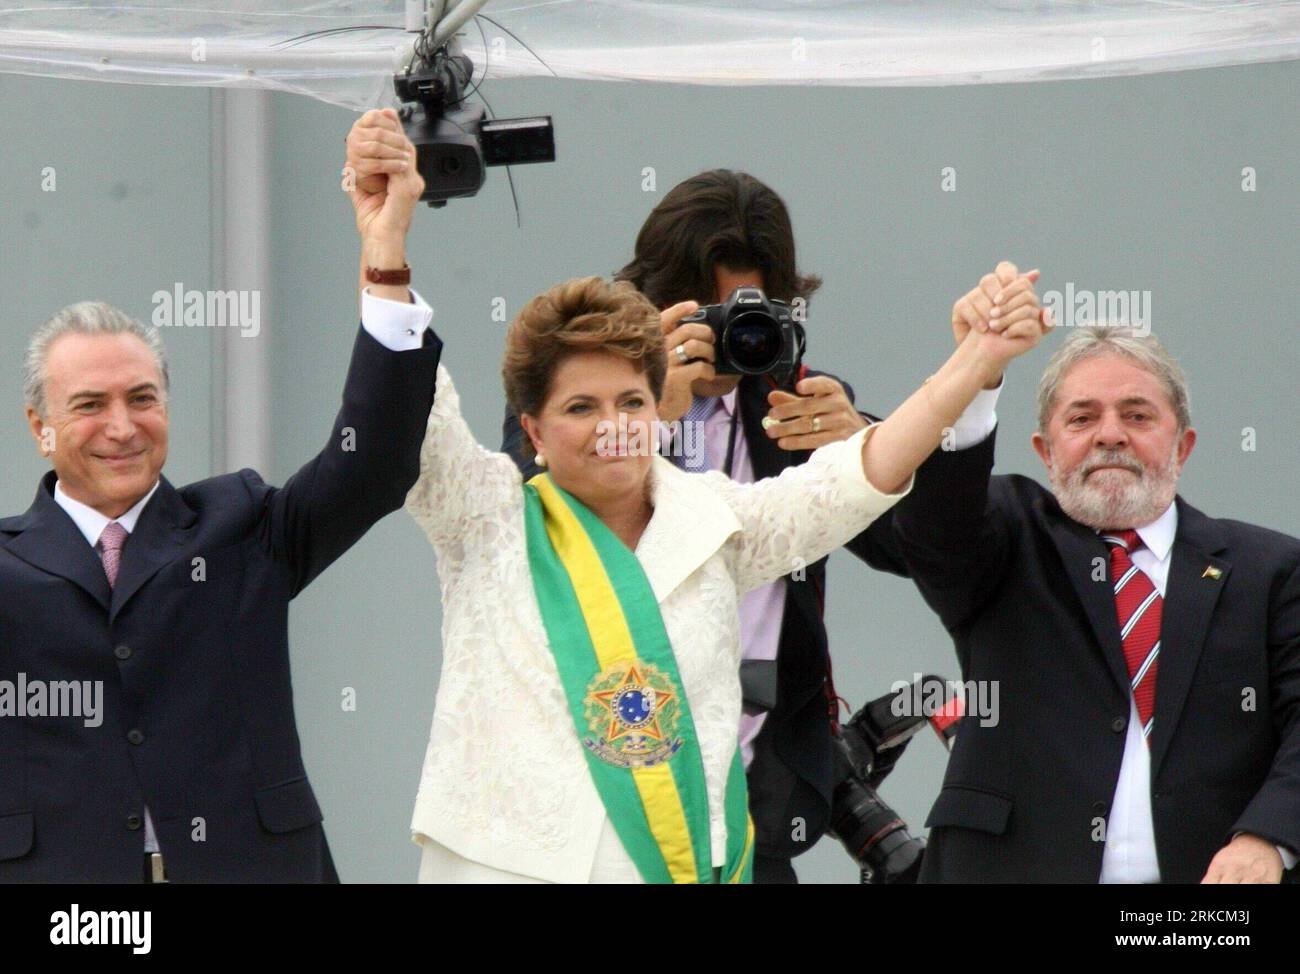 110101 -- BRASILIA, Jan. 1, 2011 Xinhua -- Brazil s President Dilma Rousseff C, Vice Presdident Michel Temer L and outgoing President Luiz Inacio Lula da Silva raise their hands outside Planalto Palace in Brasilia, Brazil, on Jan. 1, 2011. Dilma Rousseff was sworn as Brazil s first female President Saturday at the National Congress in Brasilia. Xinhua/Agencia Estado BRAZIL OUT zw BRAZIL-BRASILIA-PRESIDENT-INAUGURATION PUBLICATIONxNOTxINxCHN Stock Photo